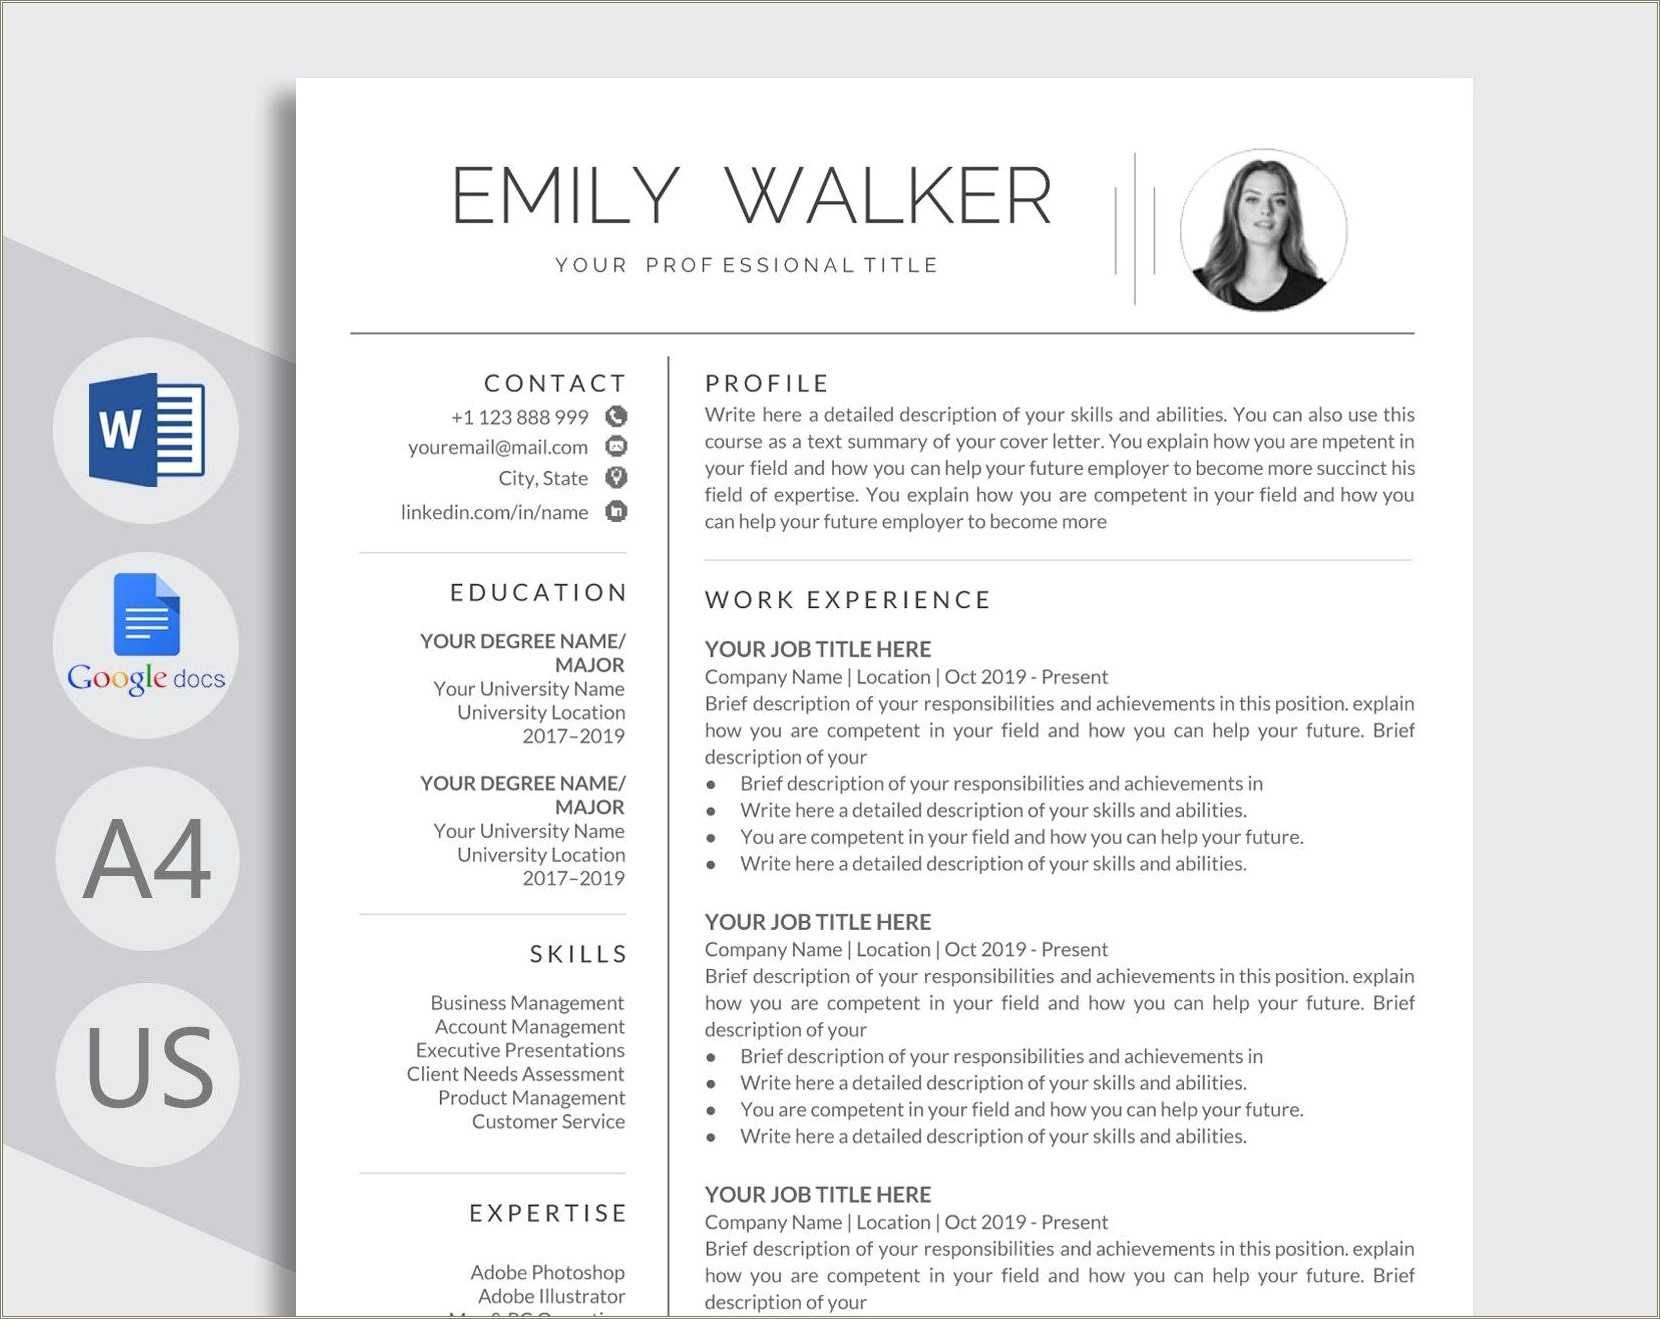 google-docs-skill-on-resume-resume-example-gallery